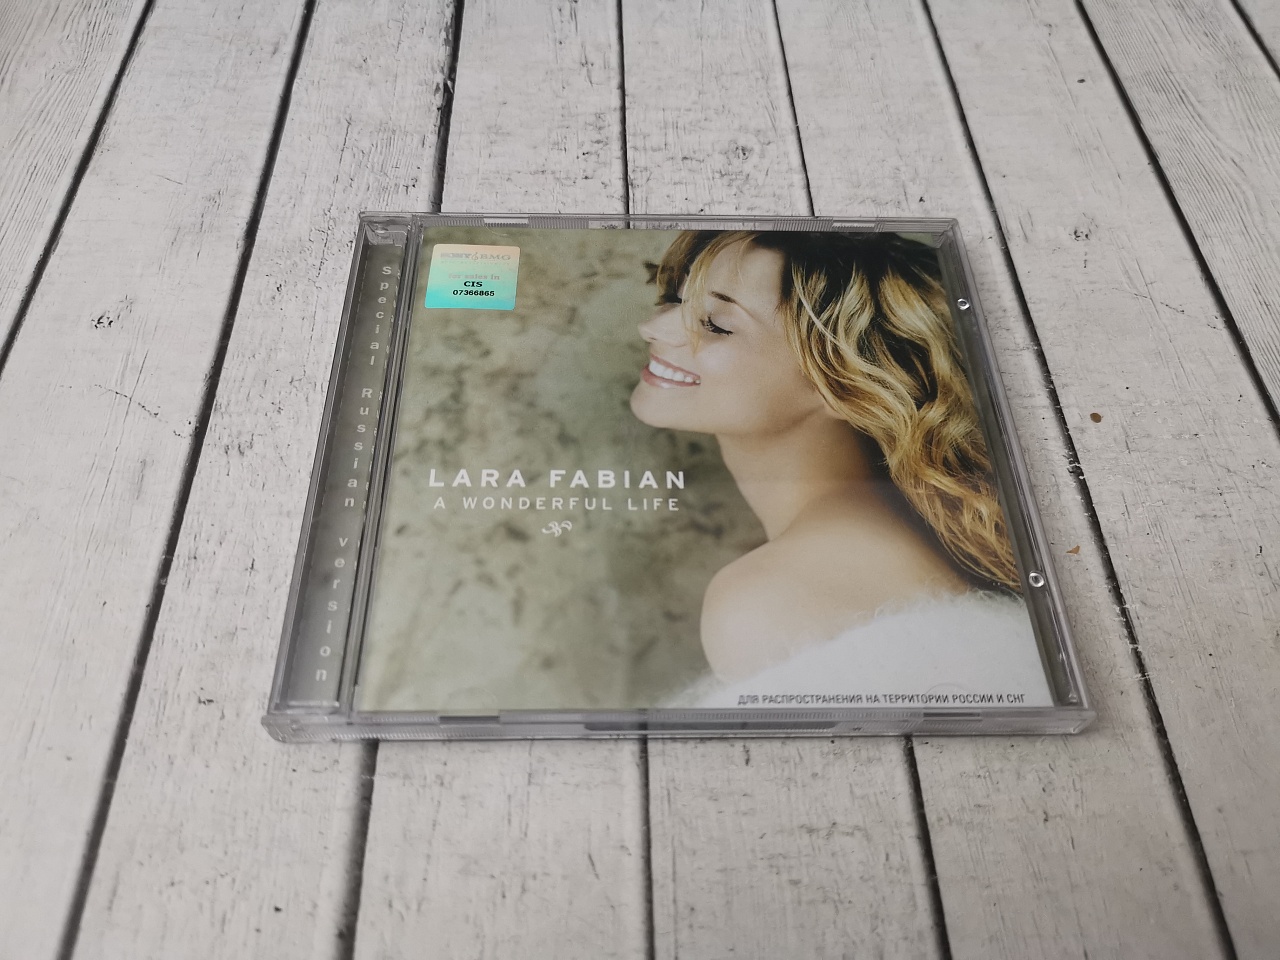 Lara Fabian - A wonderful life (CD) фото №1